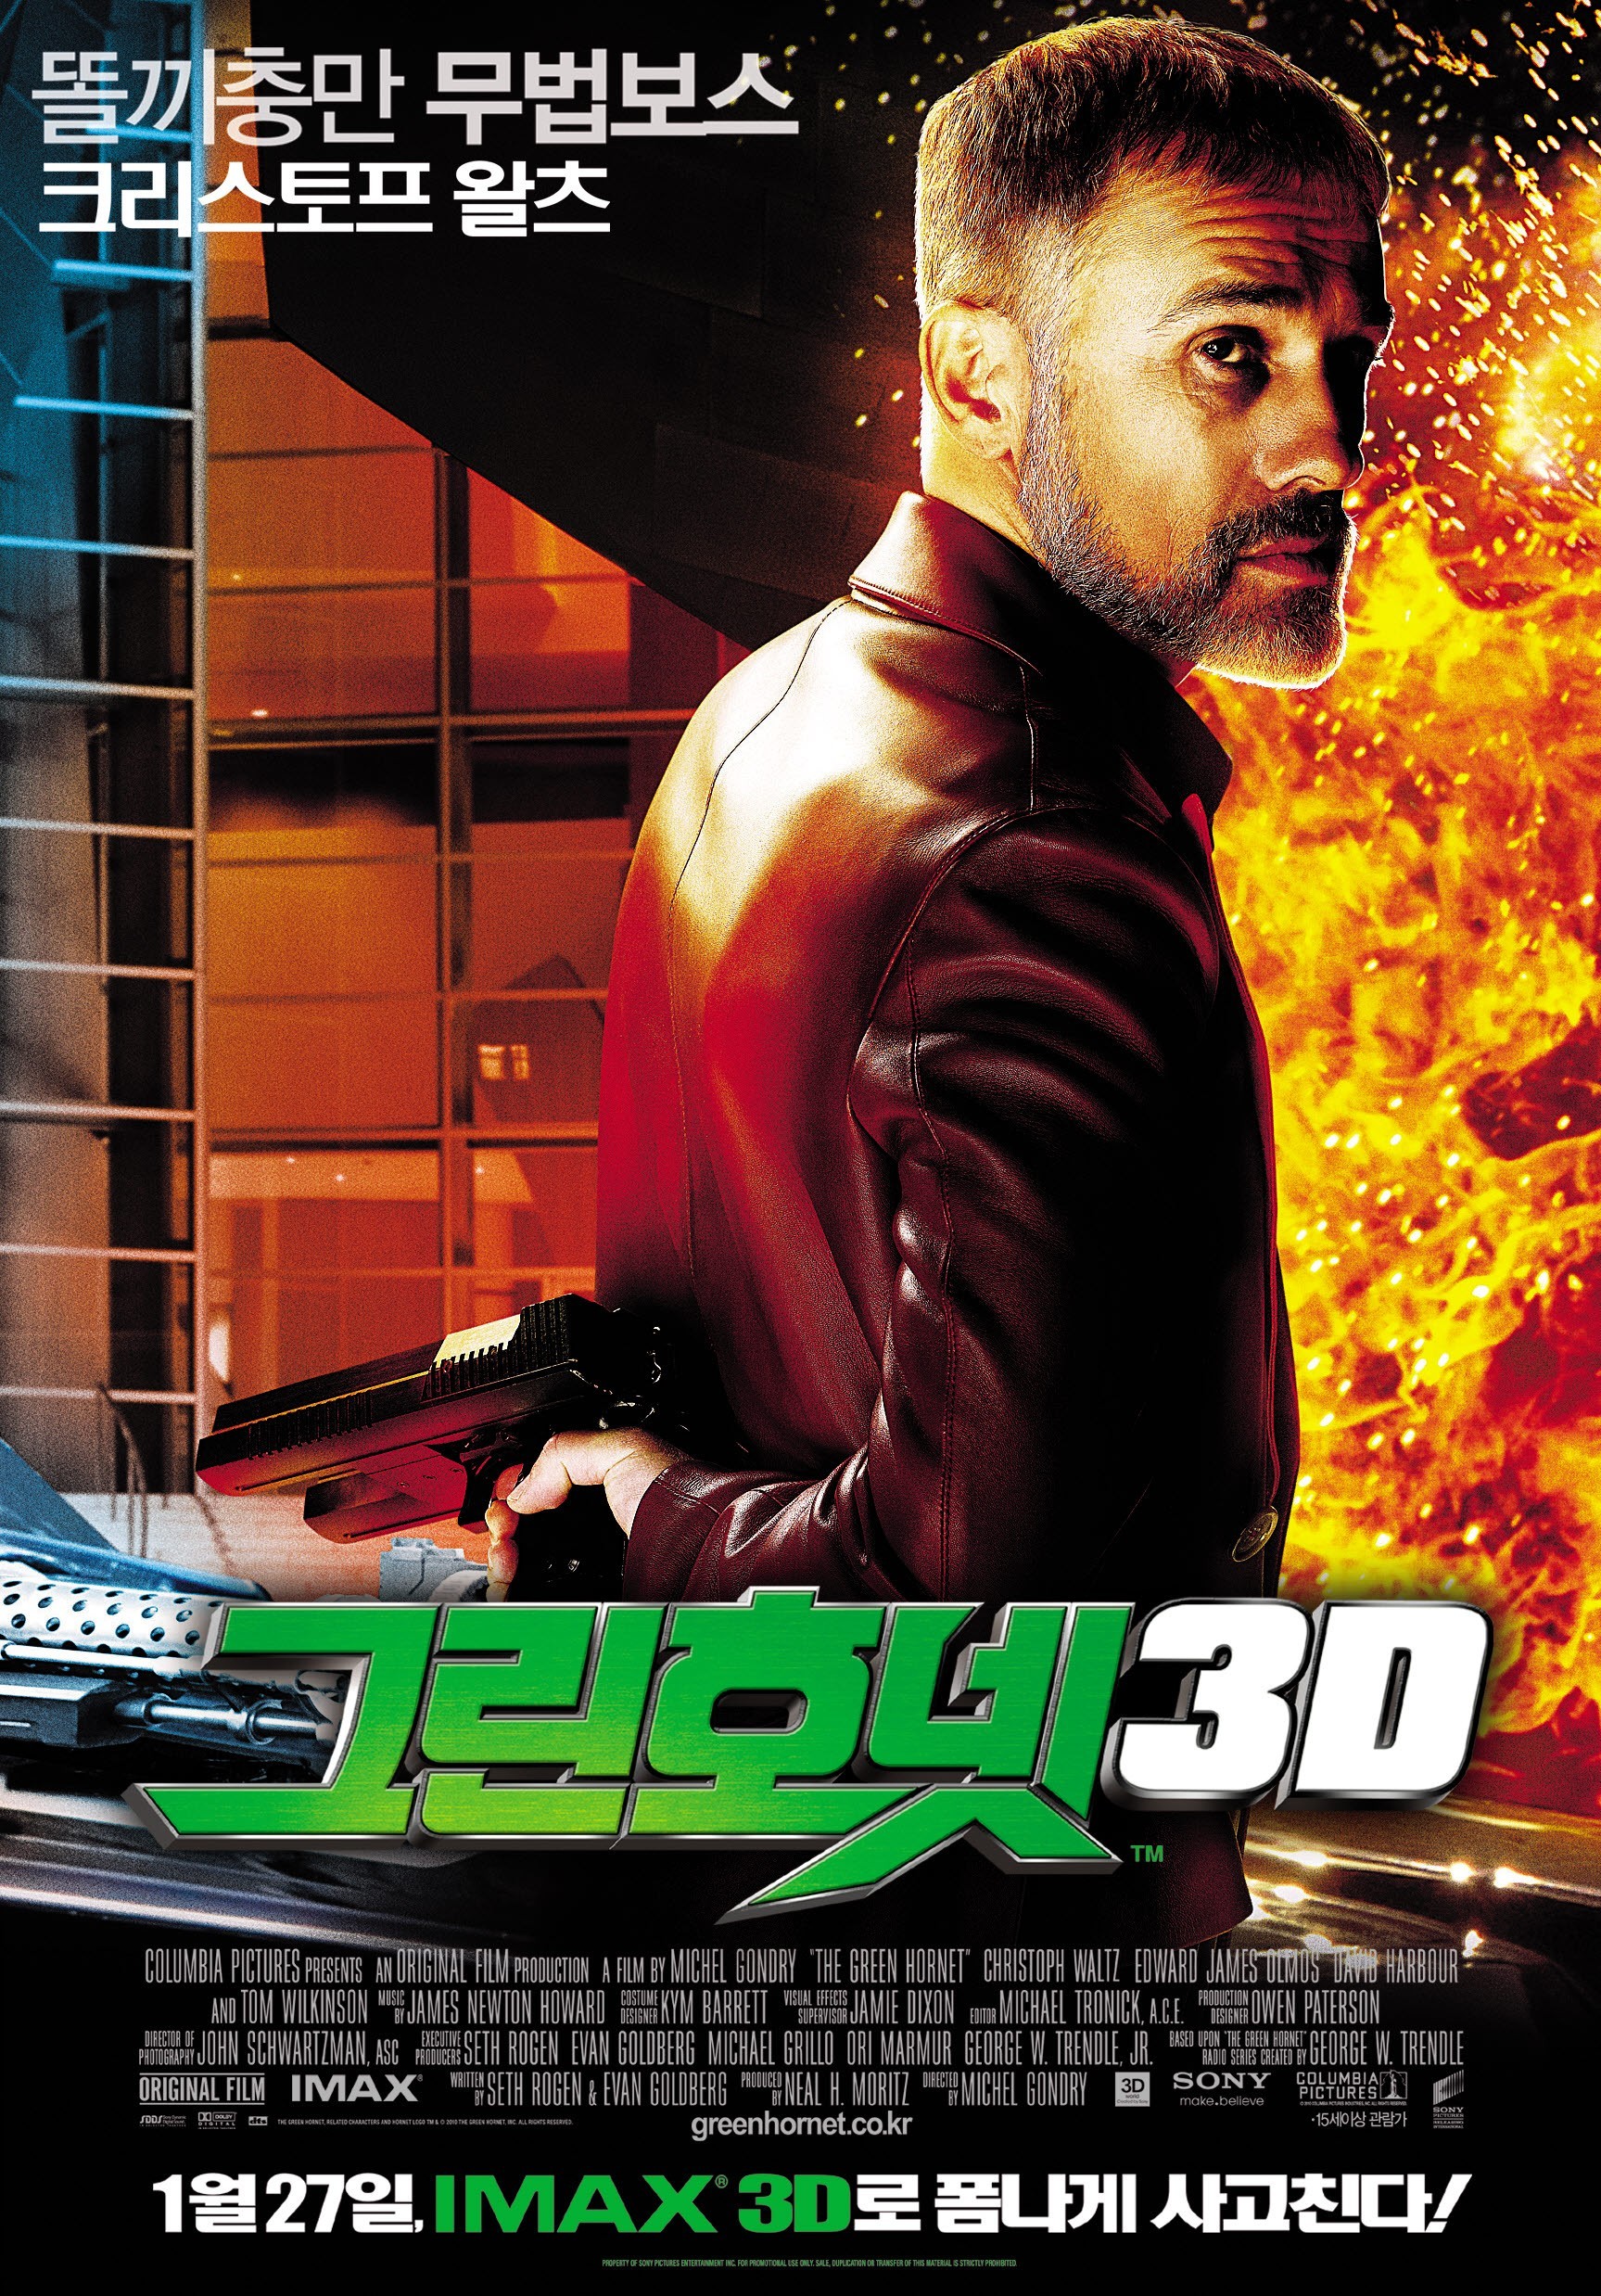 Mega Sized Movie Poster Image for The Green Hornet (#6 of 10)